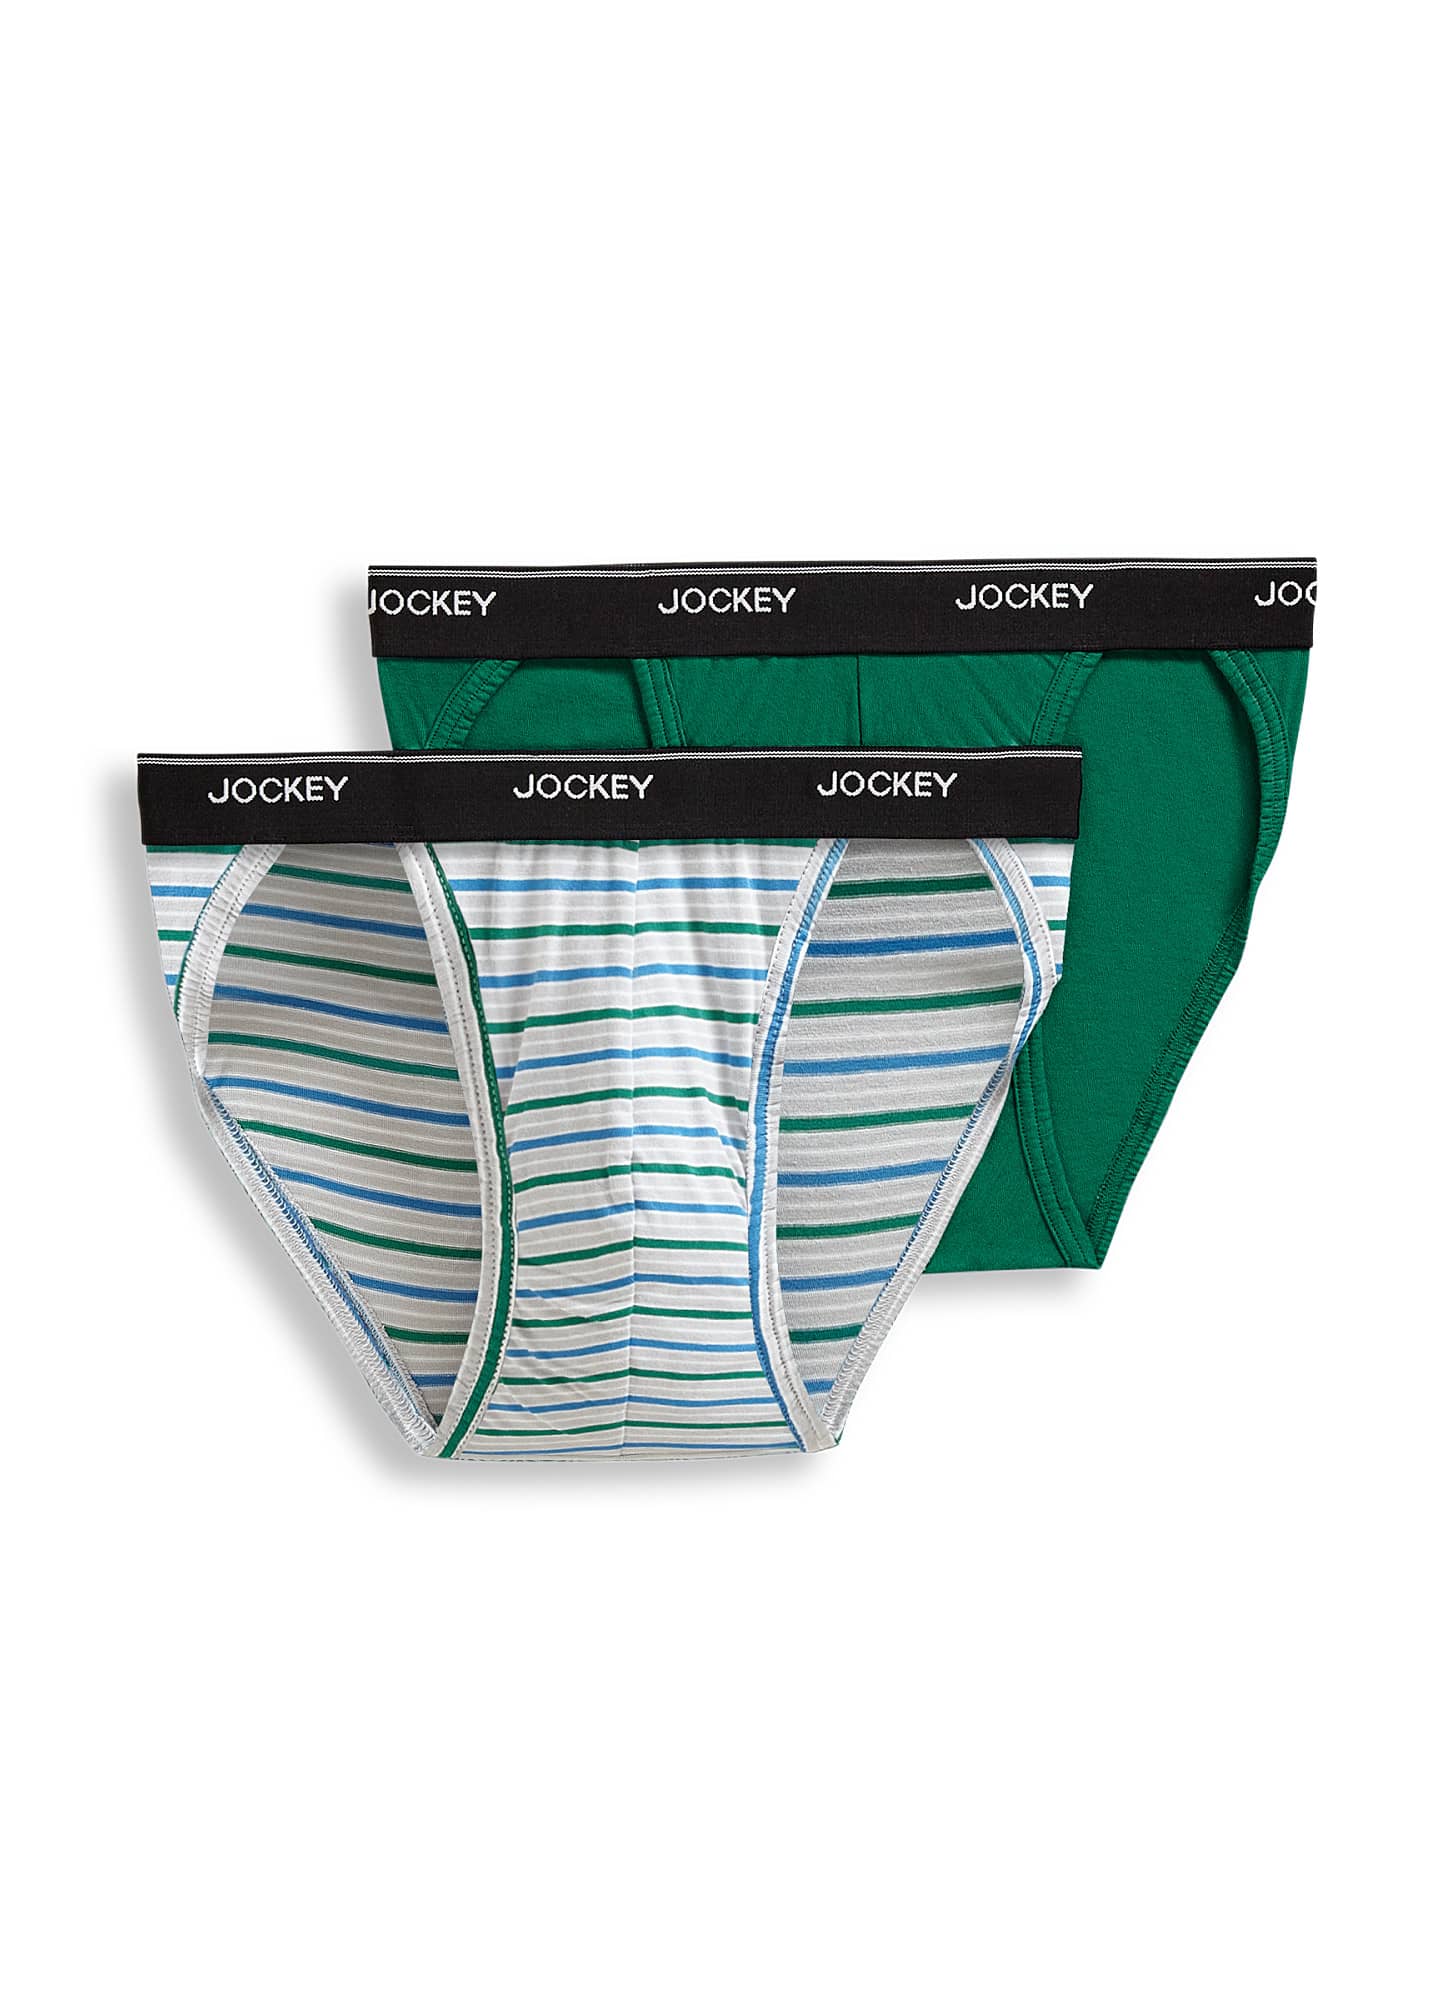 Jockey Men's Elance String Bikini - 2 Pack S White : Target